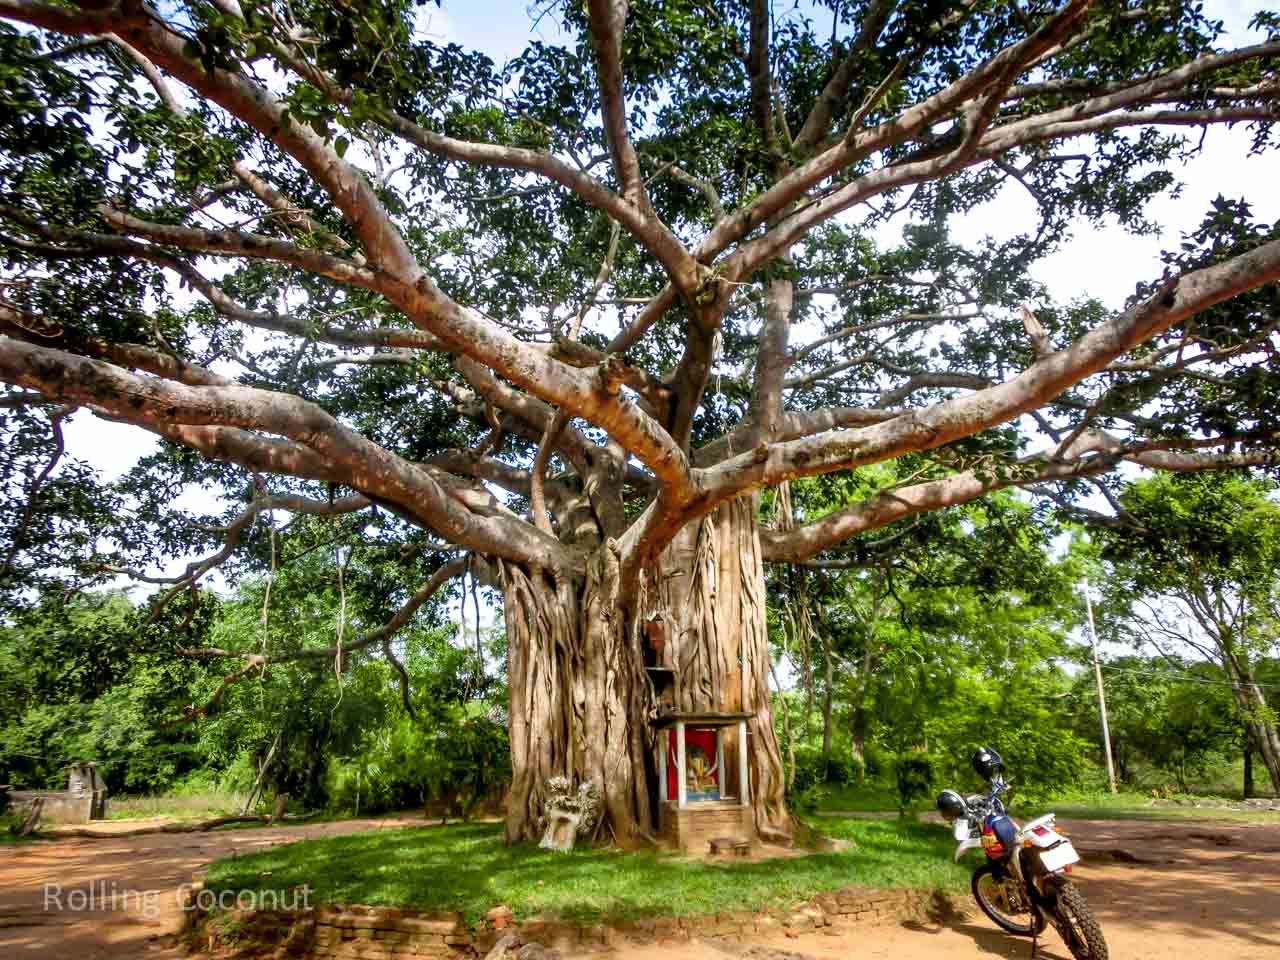 Sigiriya Sri Lanka itinerary Bodhi Tree ooaworld Rolling Coconut